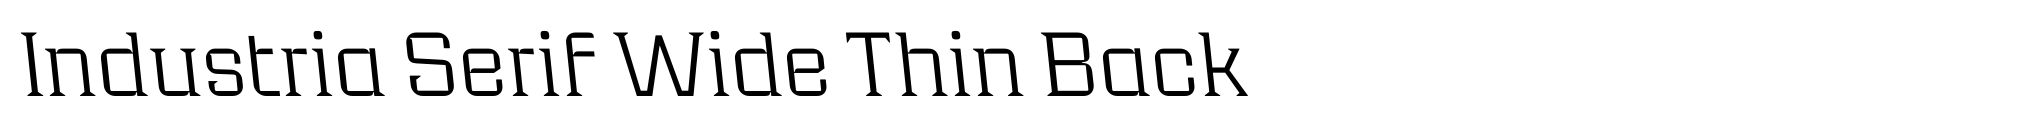 Industria Serif Wide Thin Back image